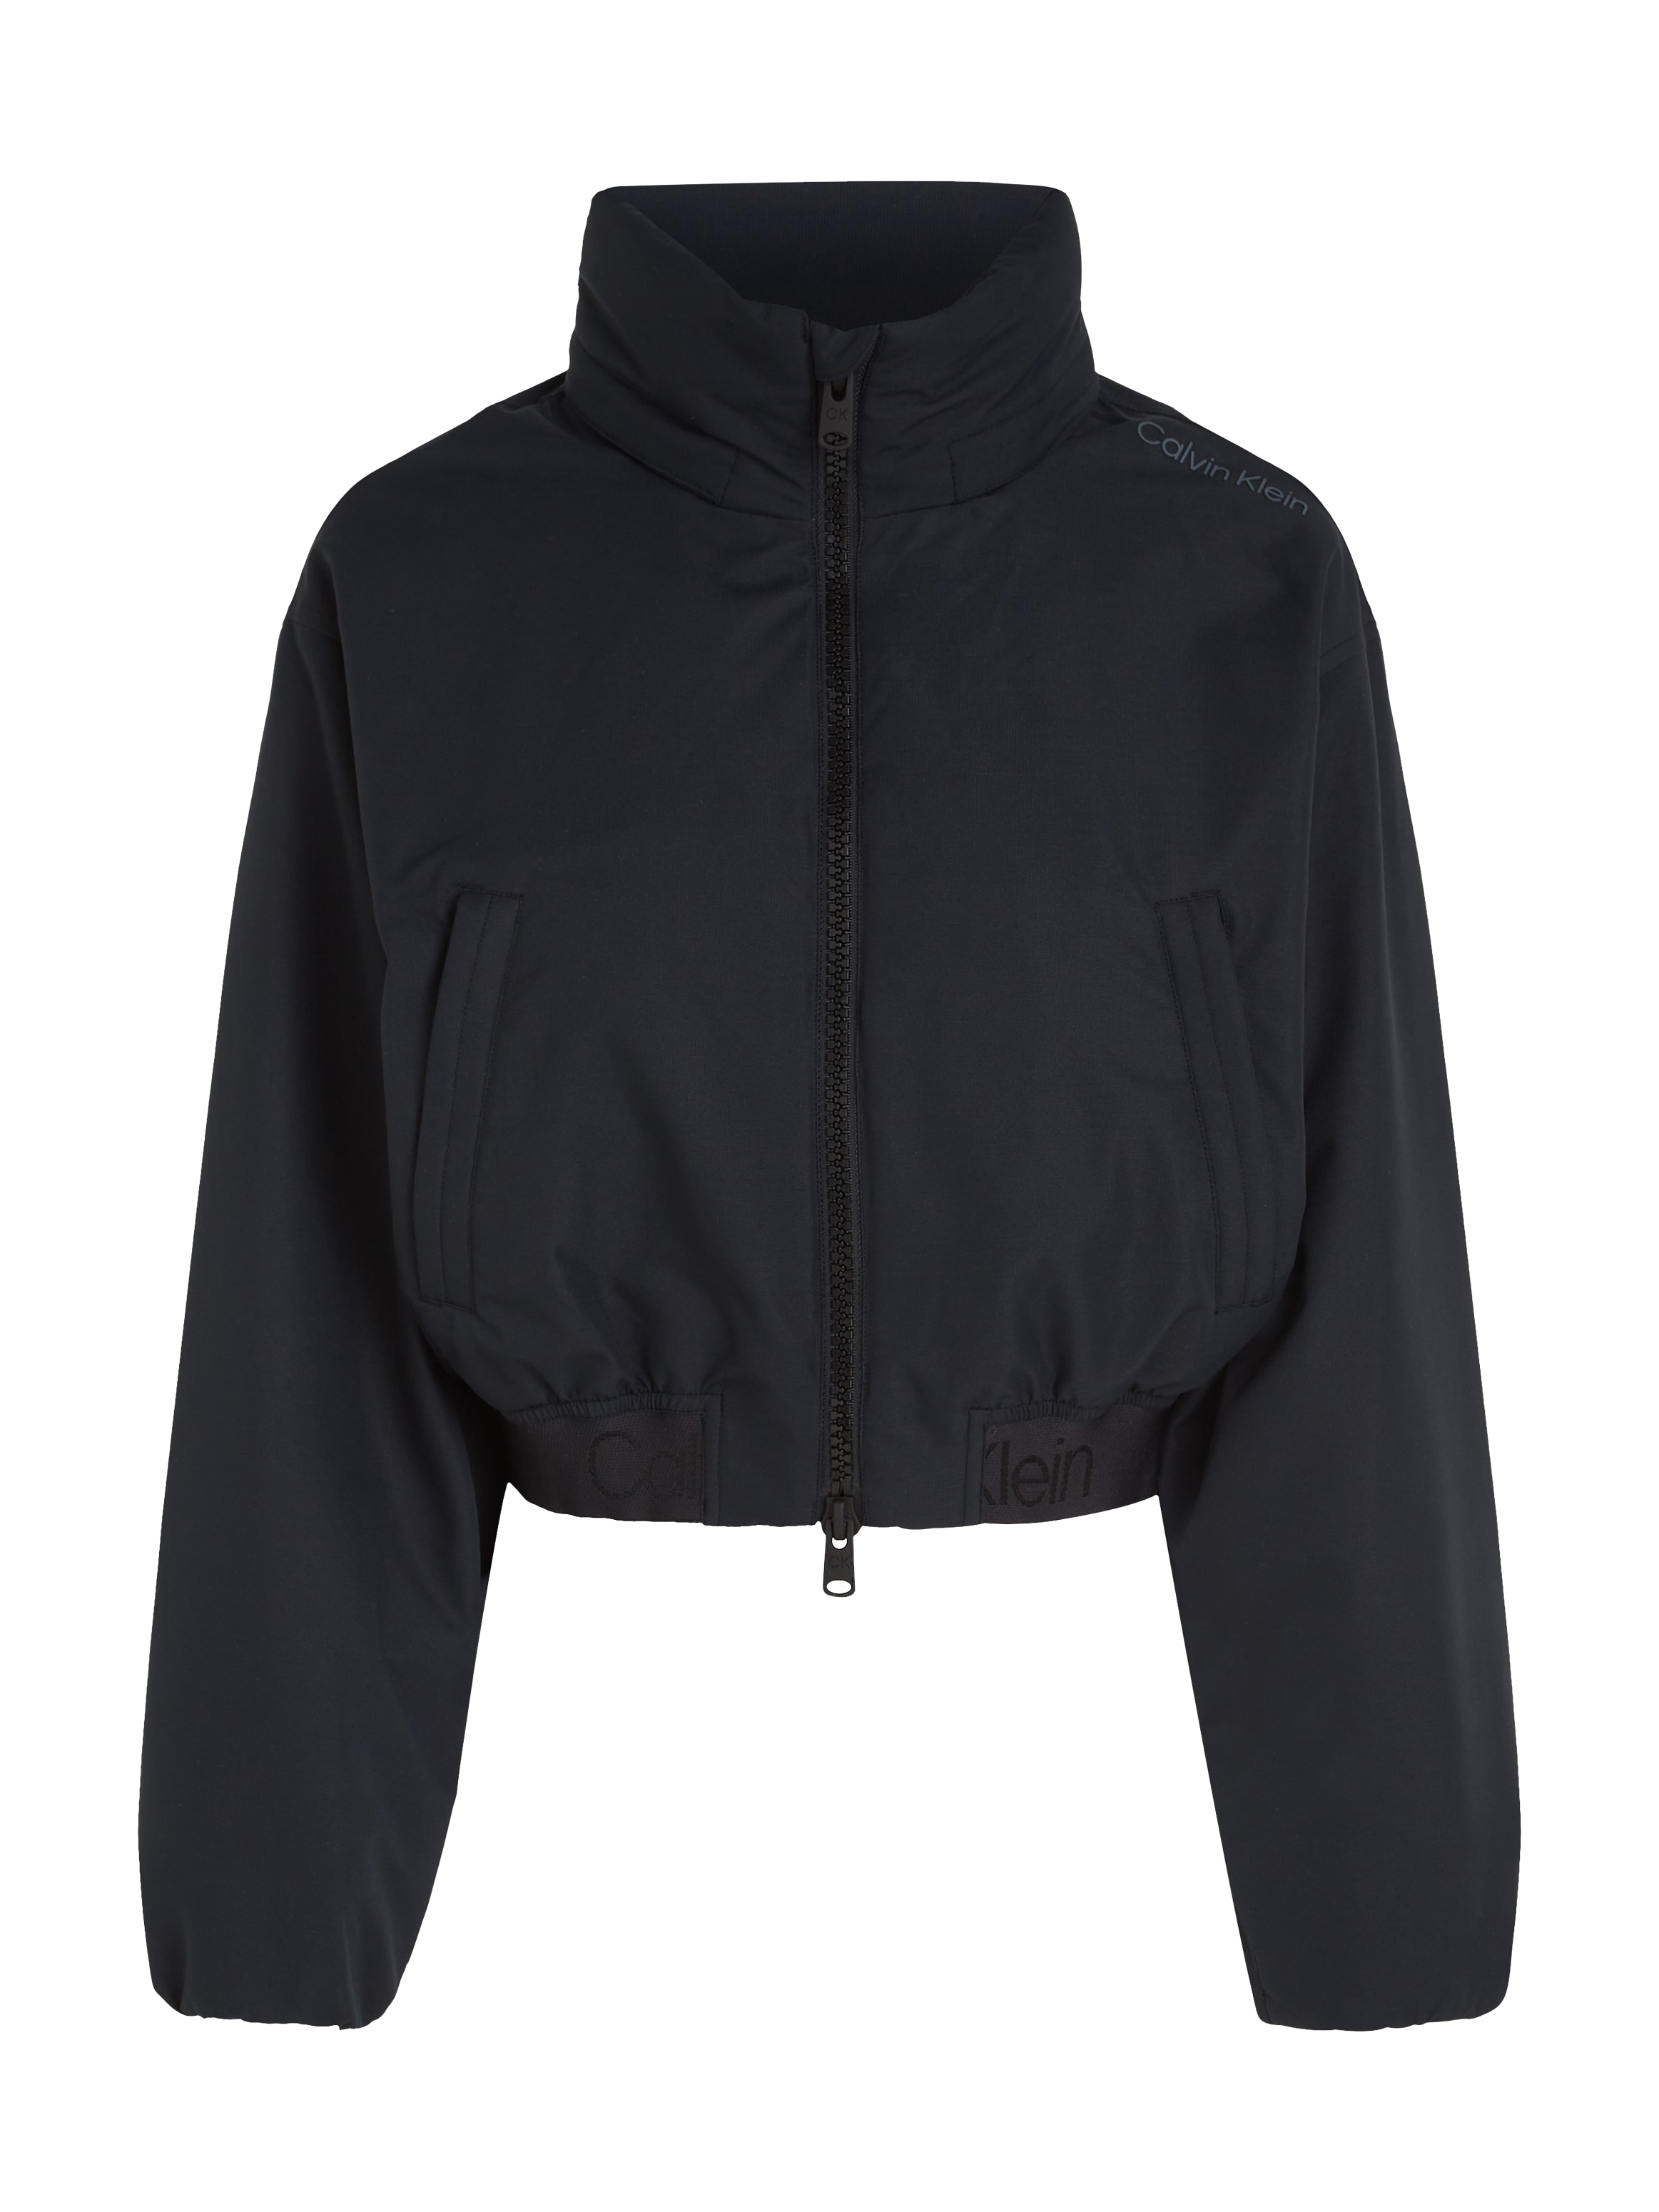 Calvin Klein Sport Outdoorjacke »PW - Padded Jacket«